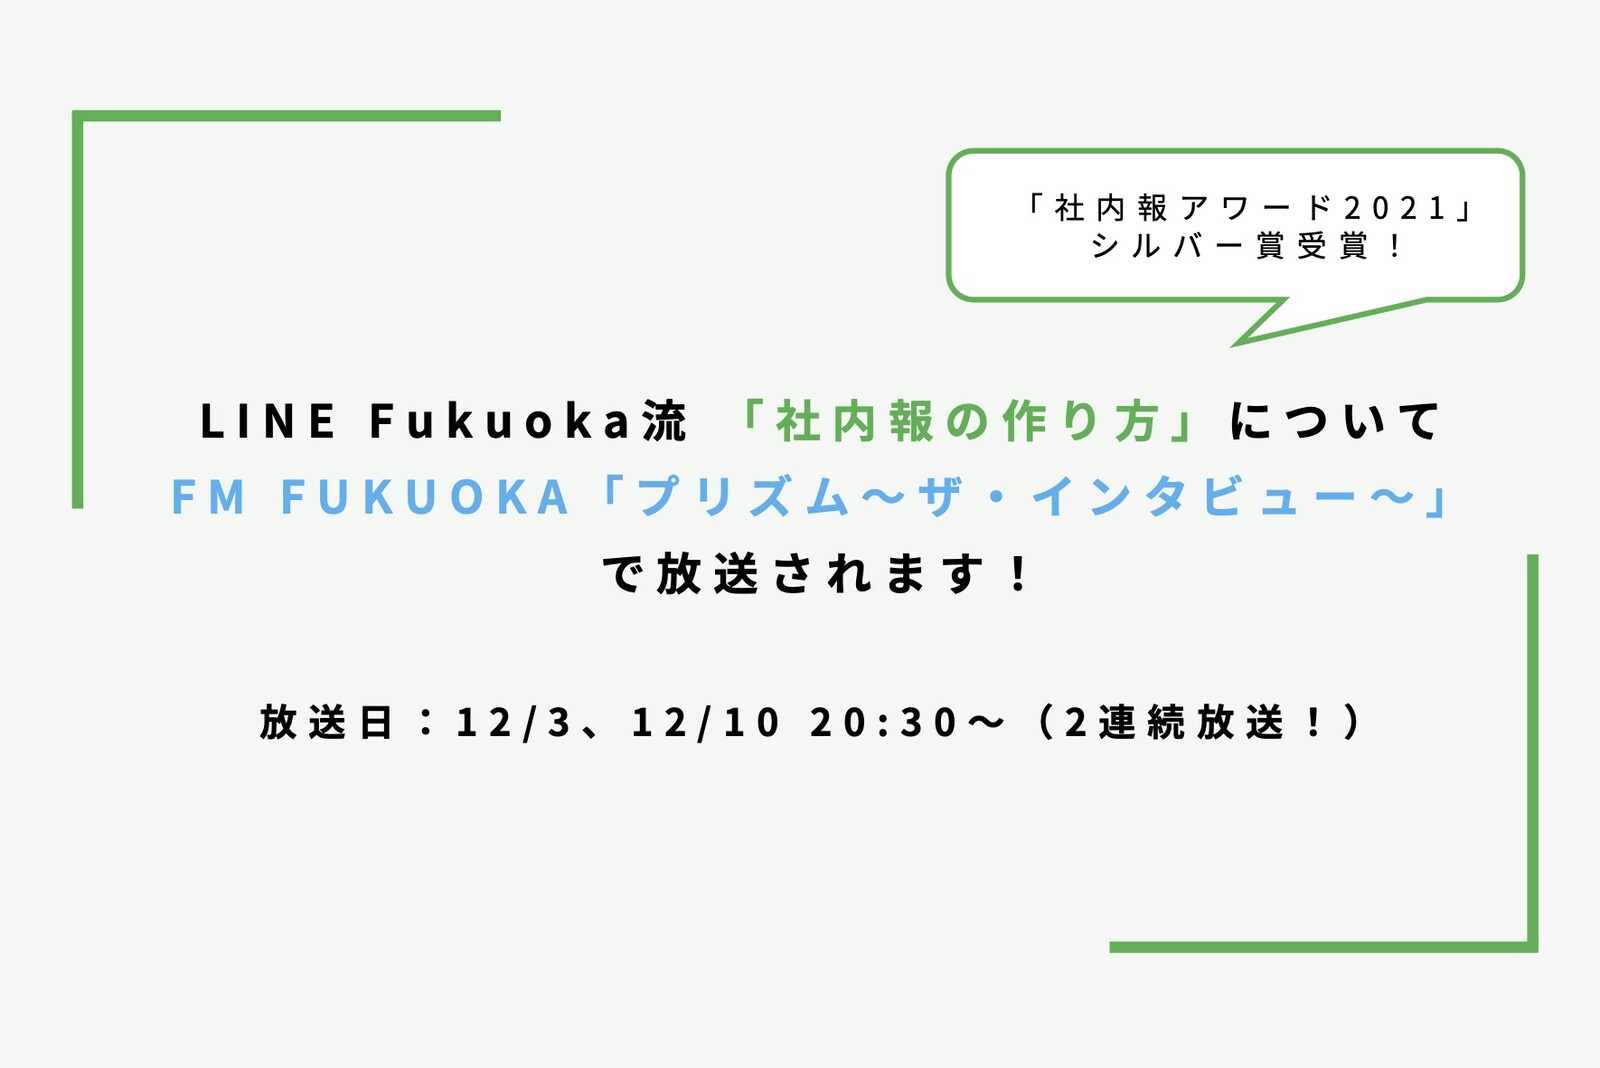 LINE Fukuoka流「社内報の作り方」について FM FUKUOKA「プリズム～ザ・インタビュー～」 で放送されます！ サムネイル画像